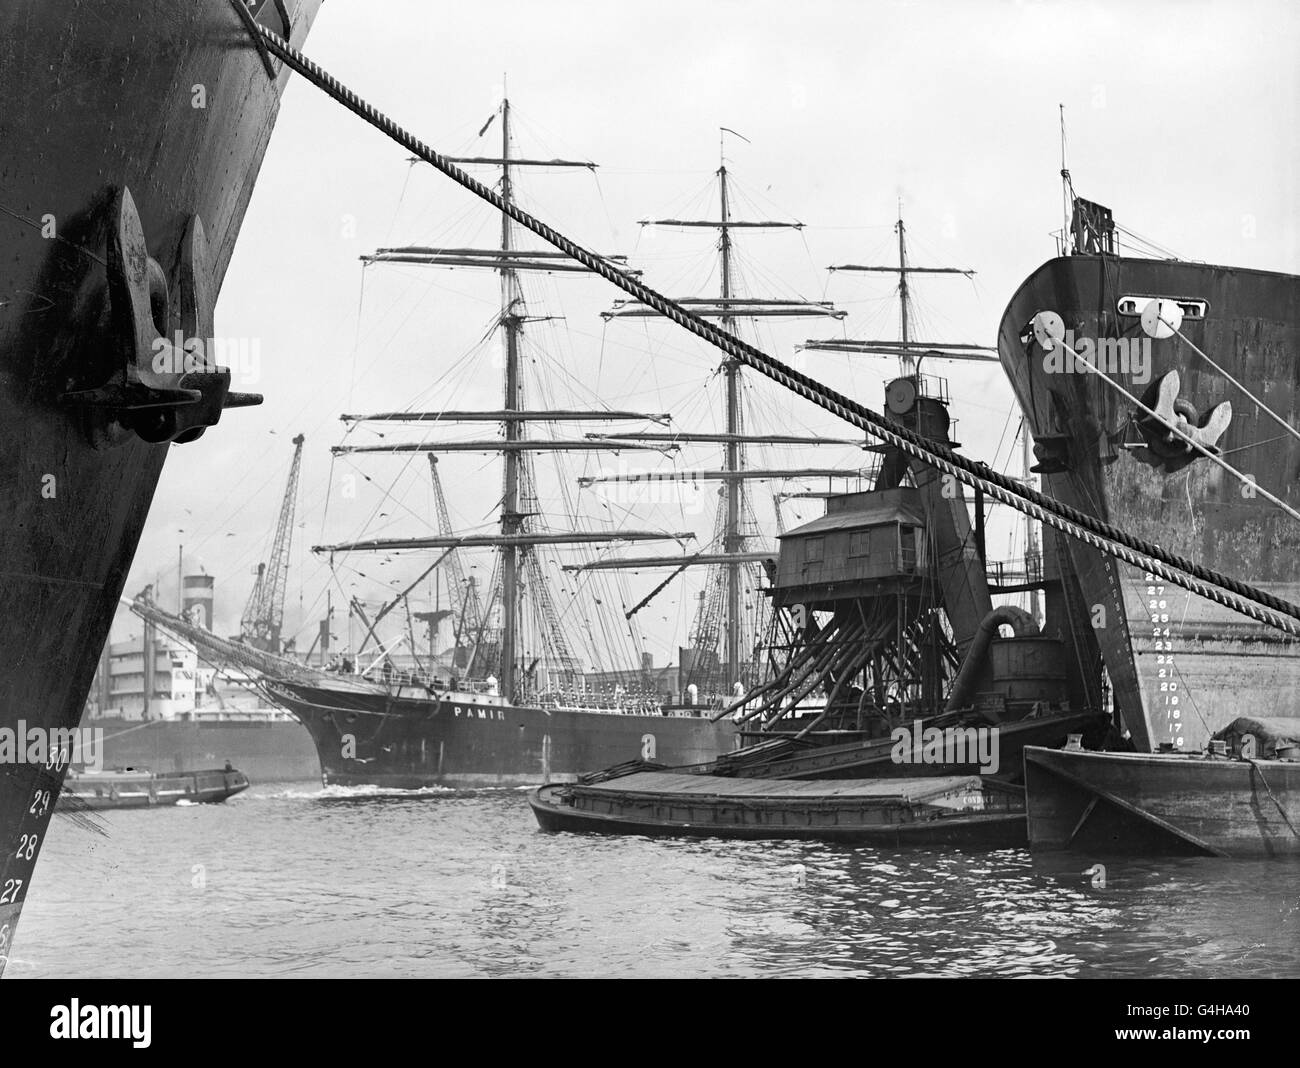 Transport - Pamir - Victoria Dock, Port of London Stock Photo